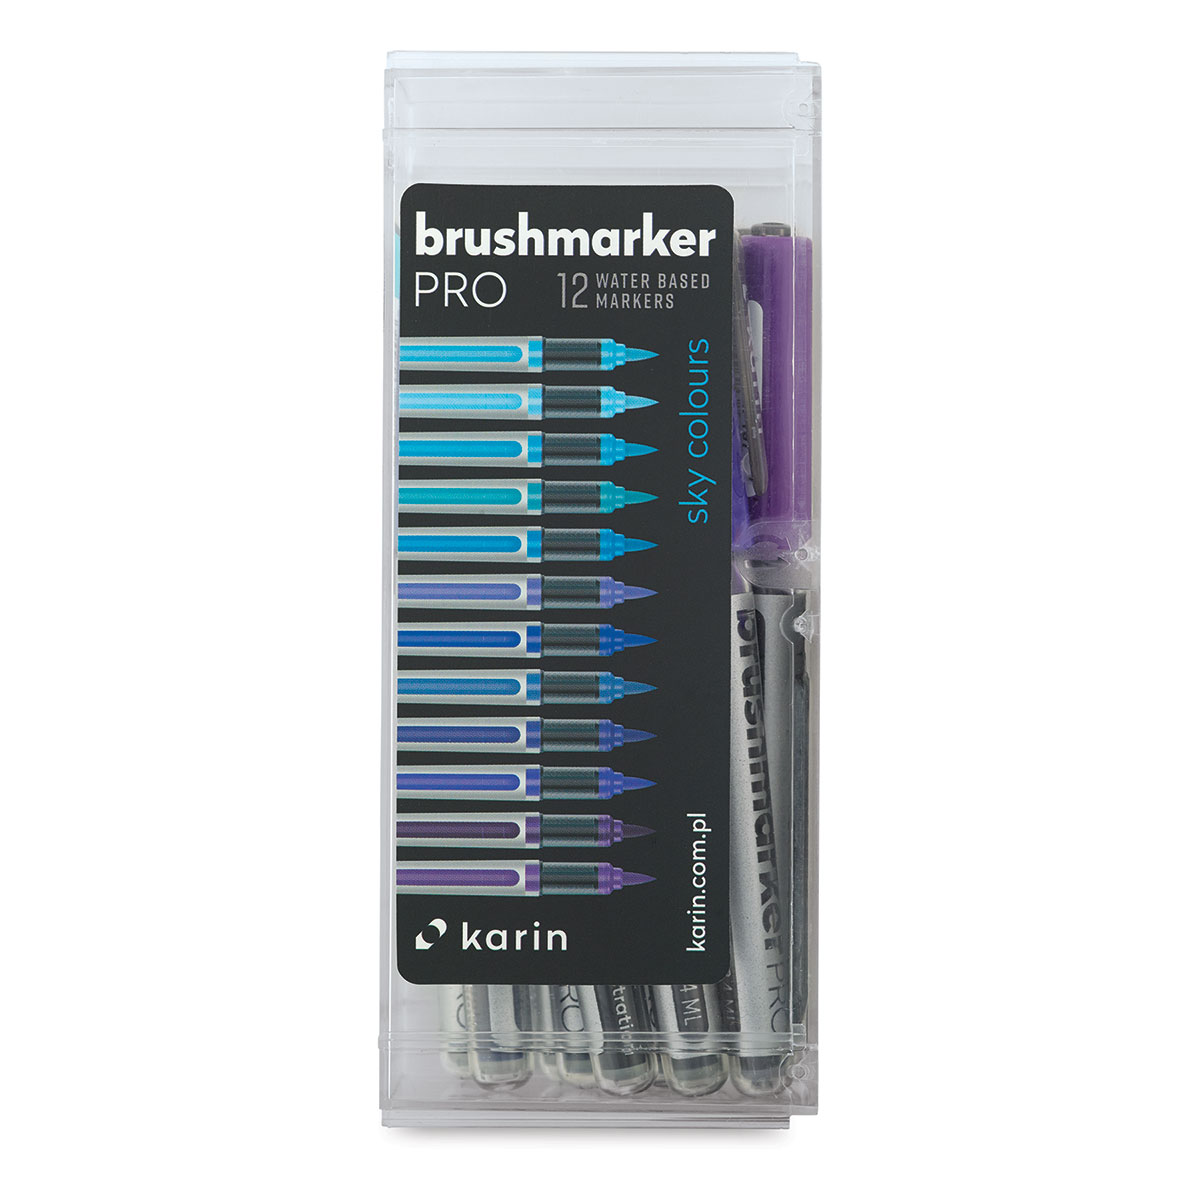 63 Karin Brushmarker Pro Markers